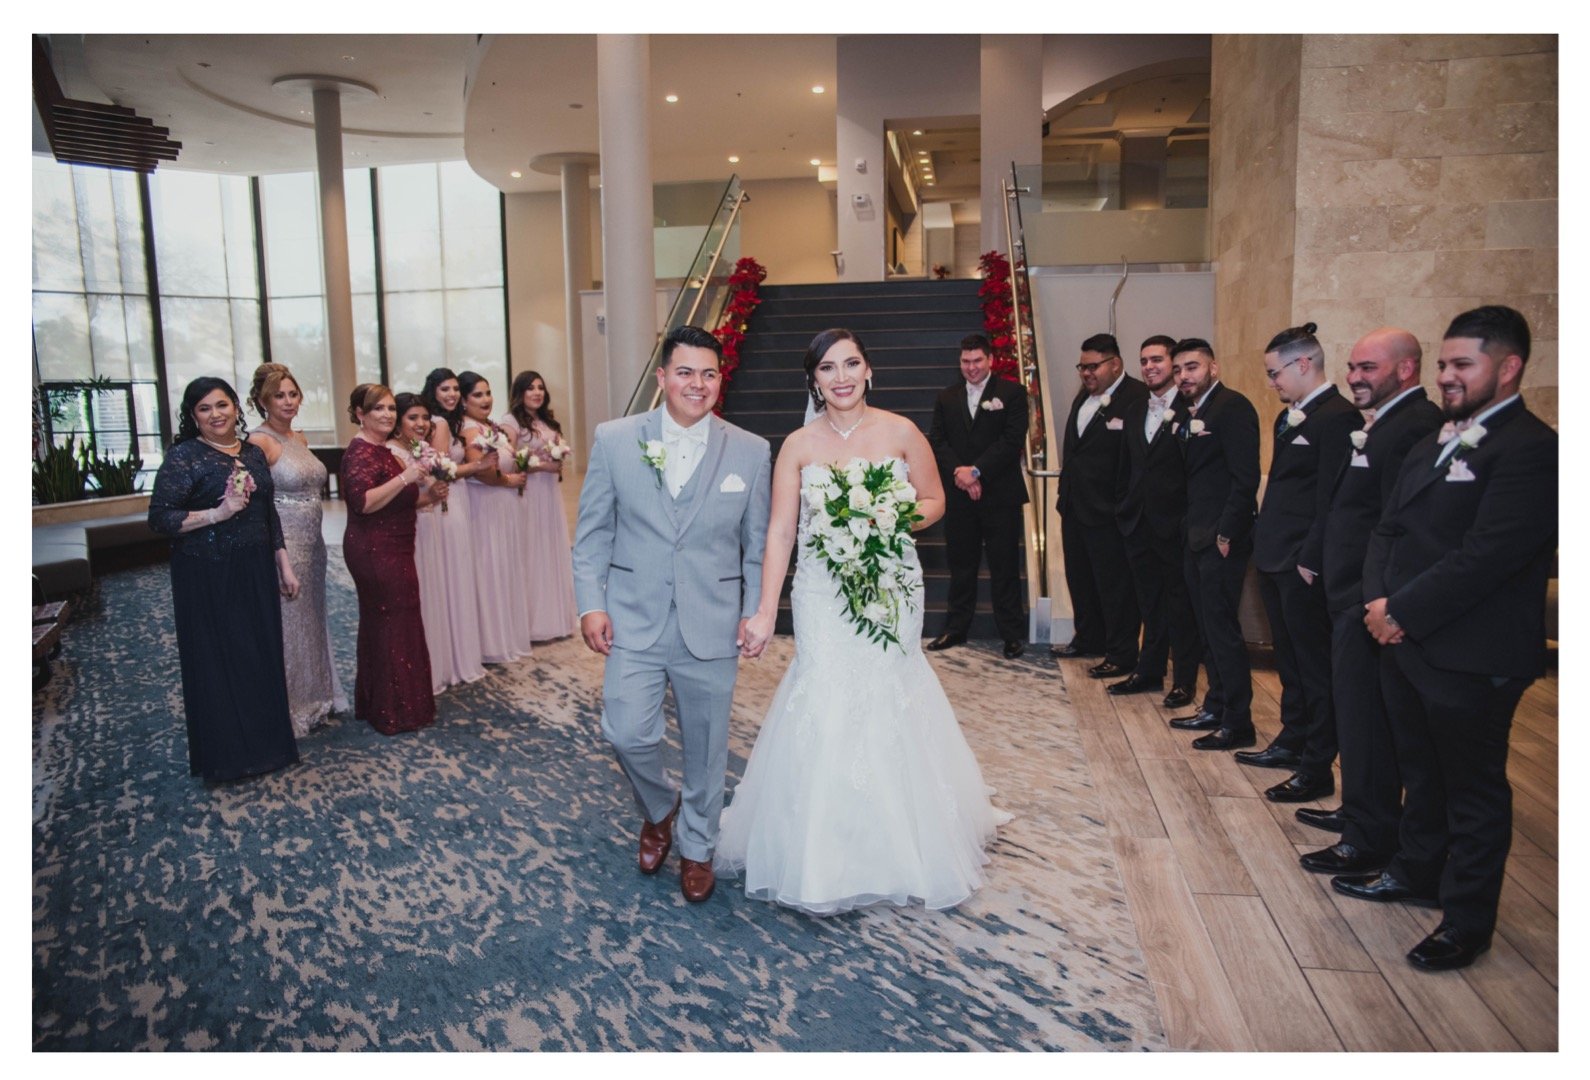 Jersson Luna Photography-BridalBuzz-San Antonio Weddings